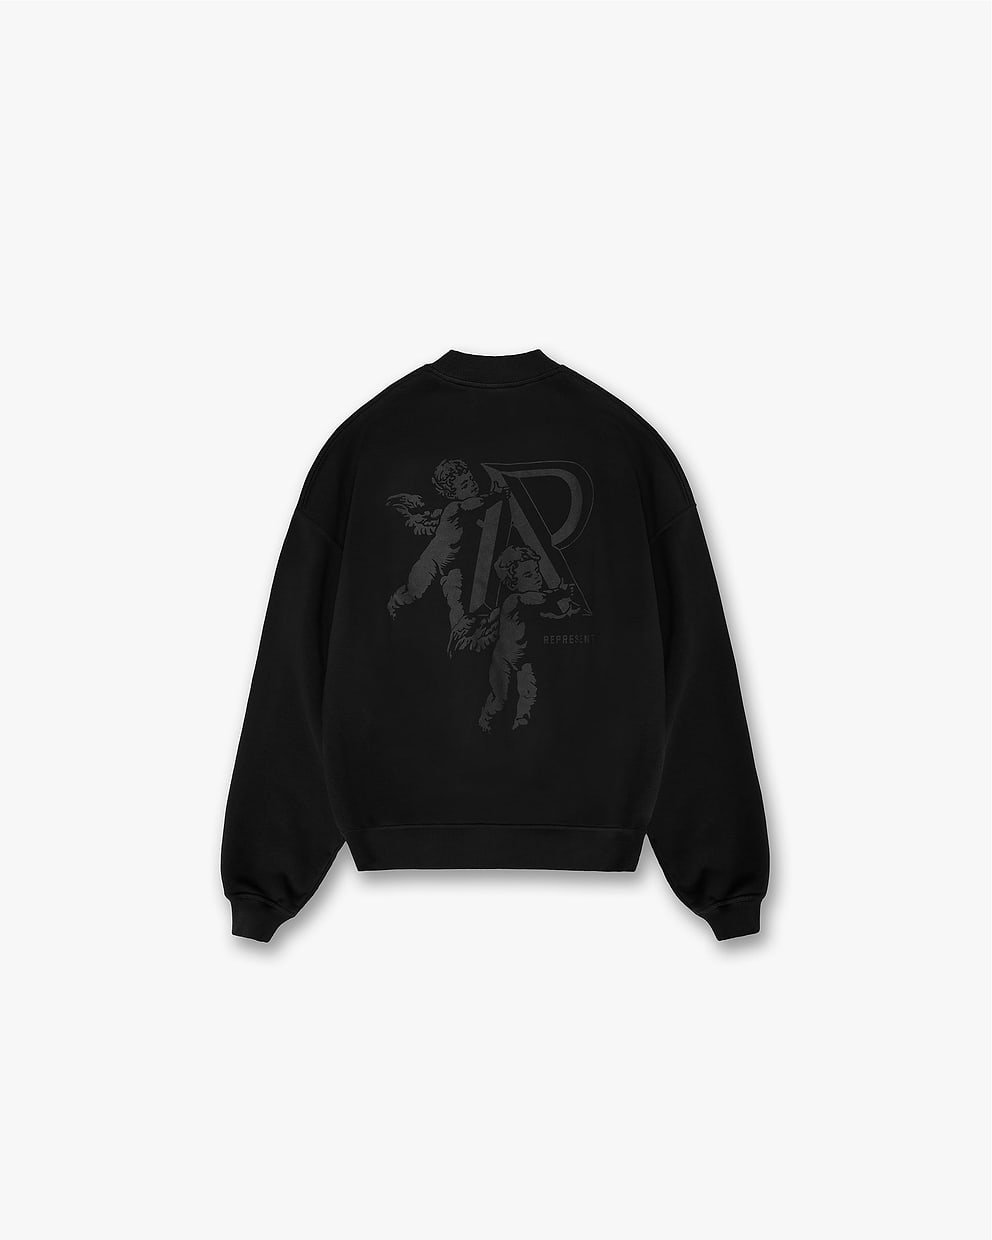 Cherub Initial Sweater | Jet Black | REPRESENT CLO